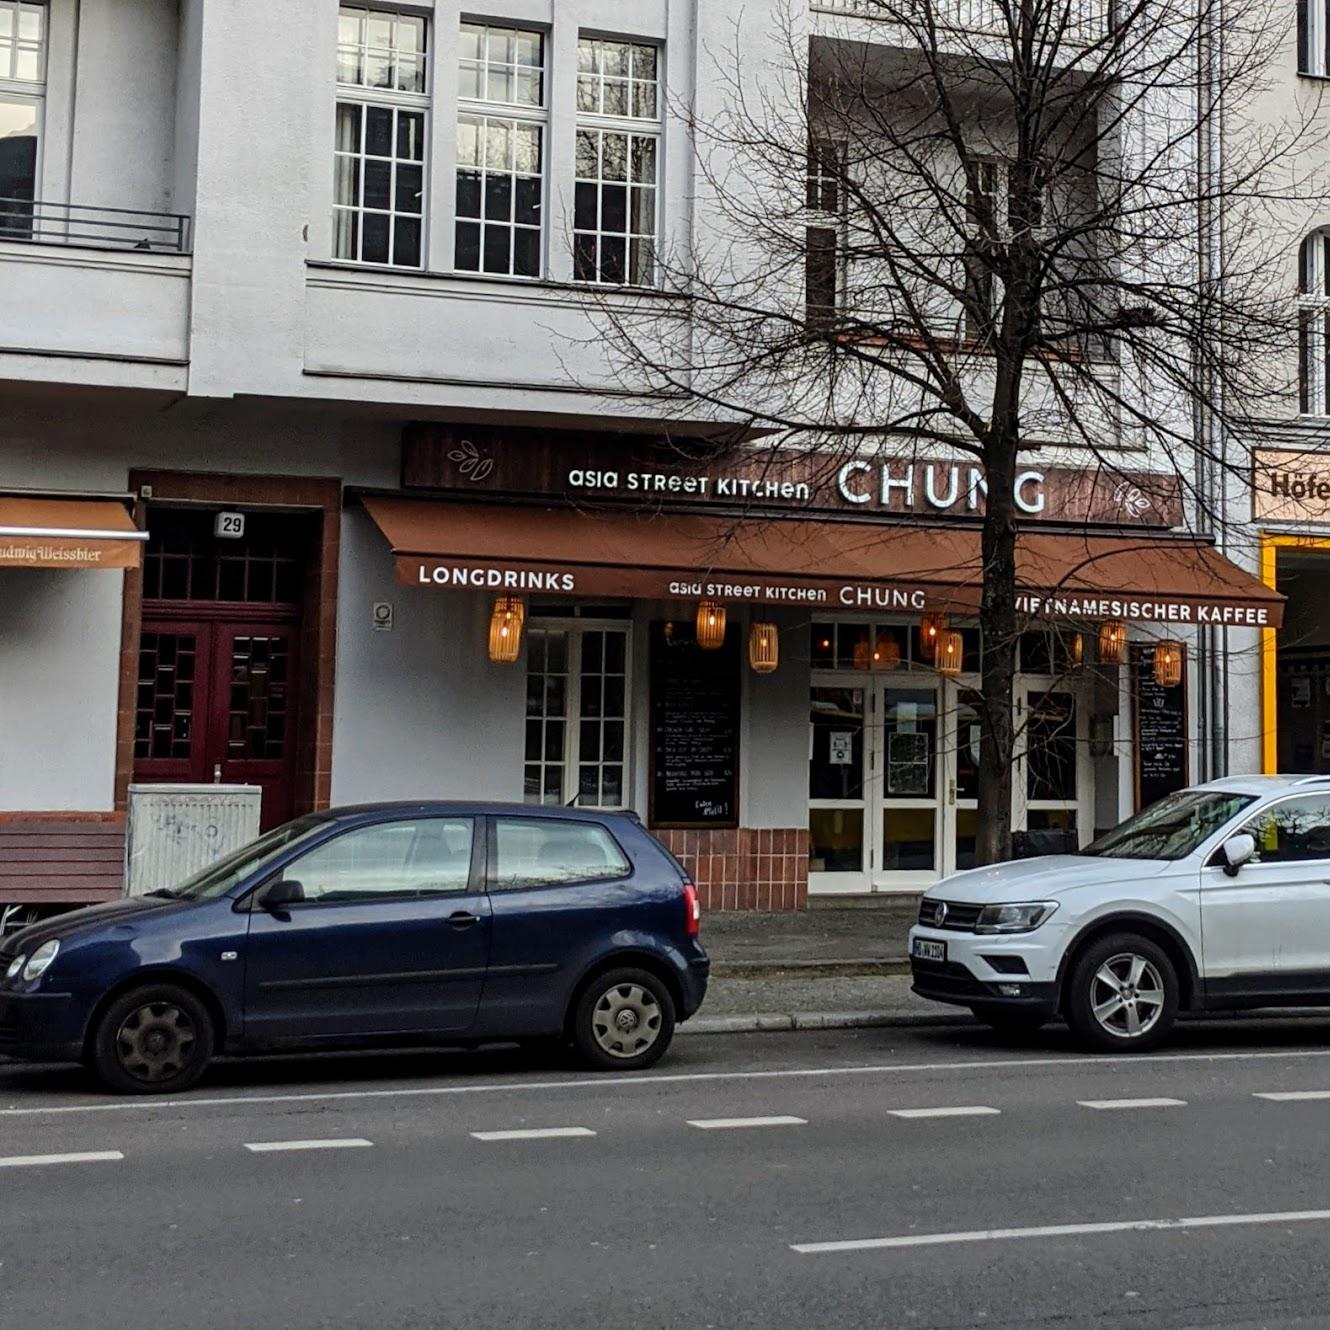 Restaurant "Chung Asia Street Kitchen" in Berlin